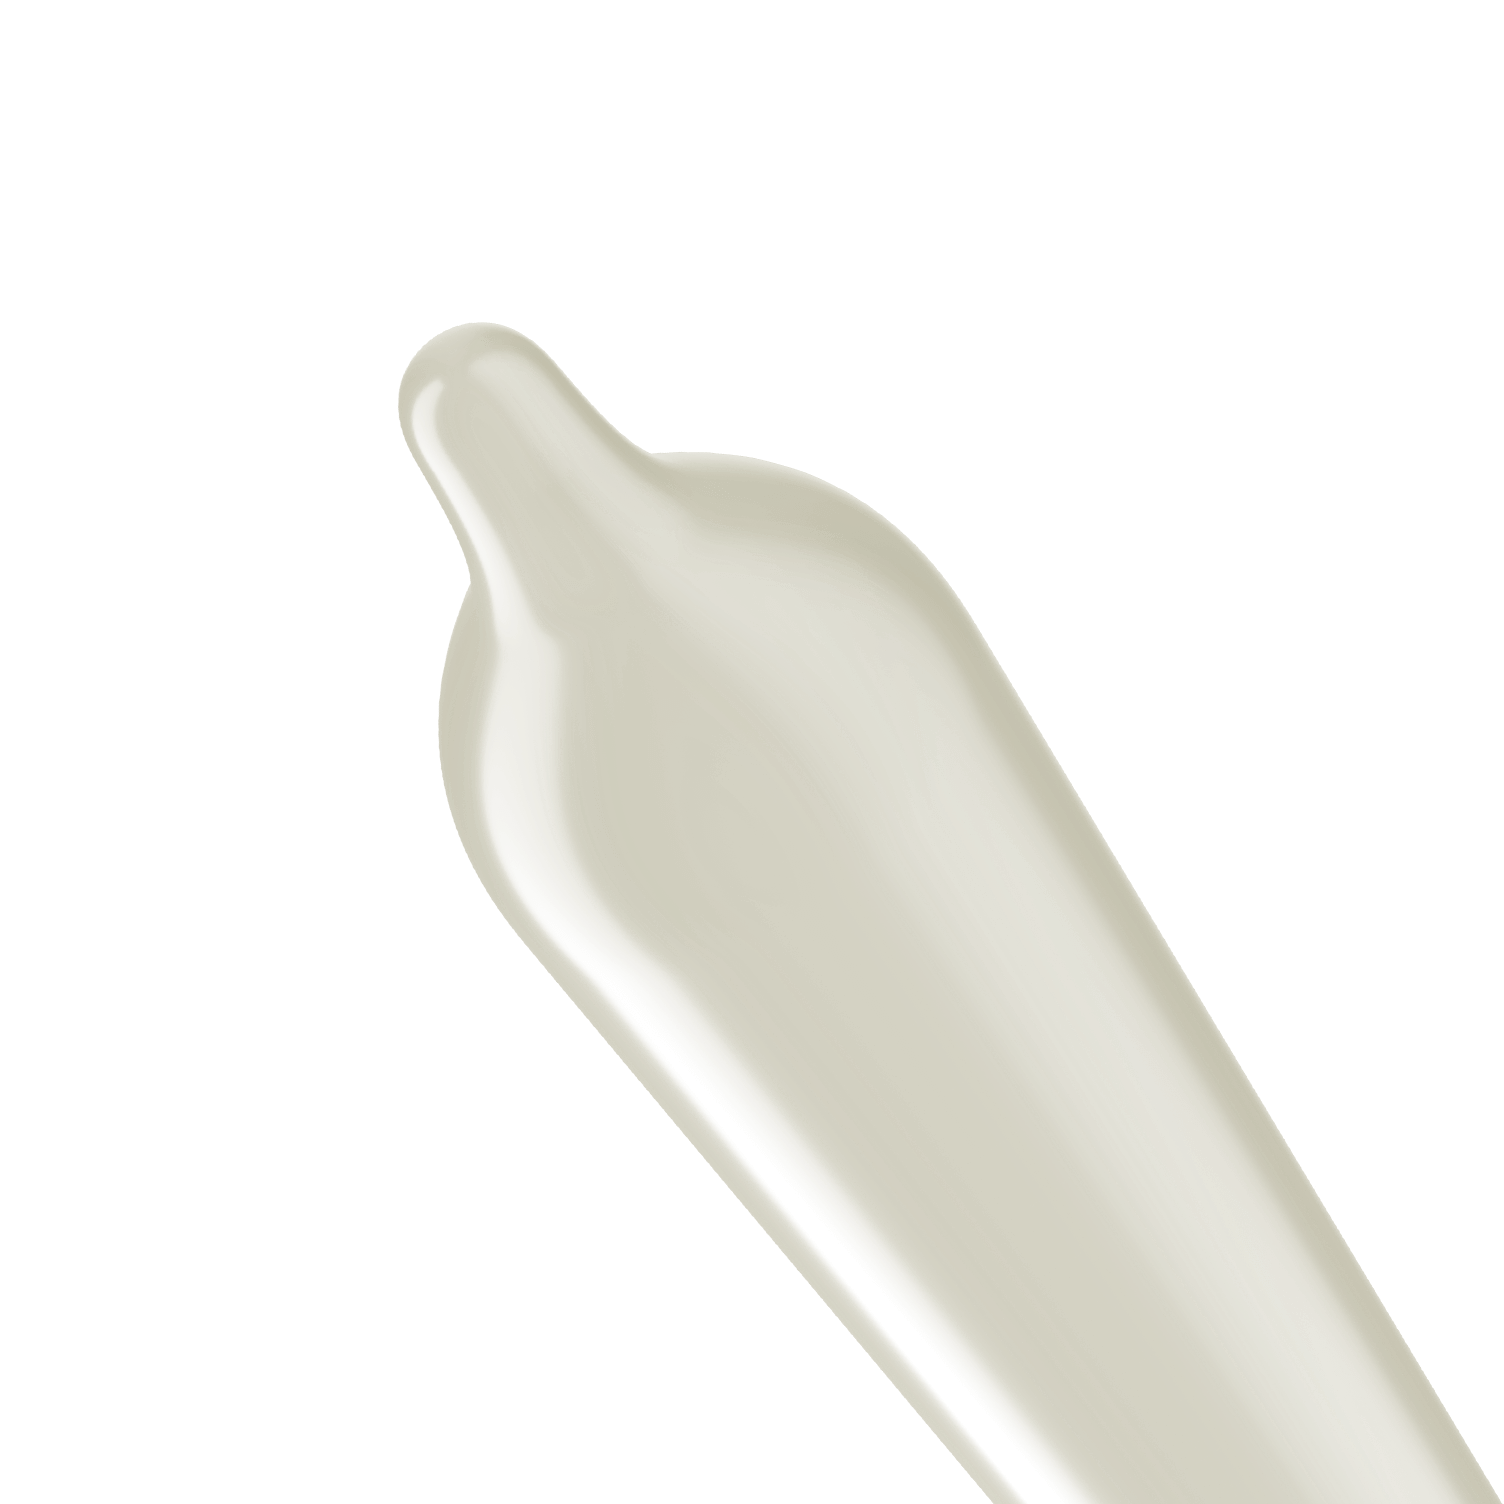 Trojan Extended Pleasure straight condom shape with reservoir tip.